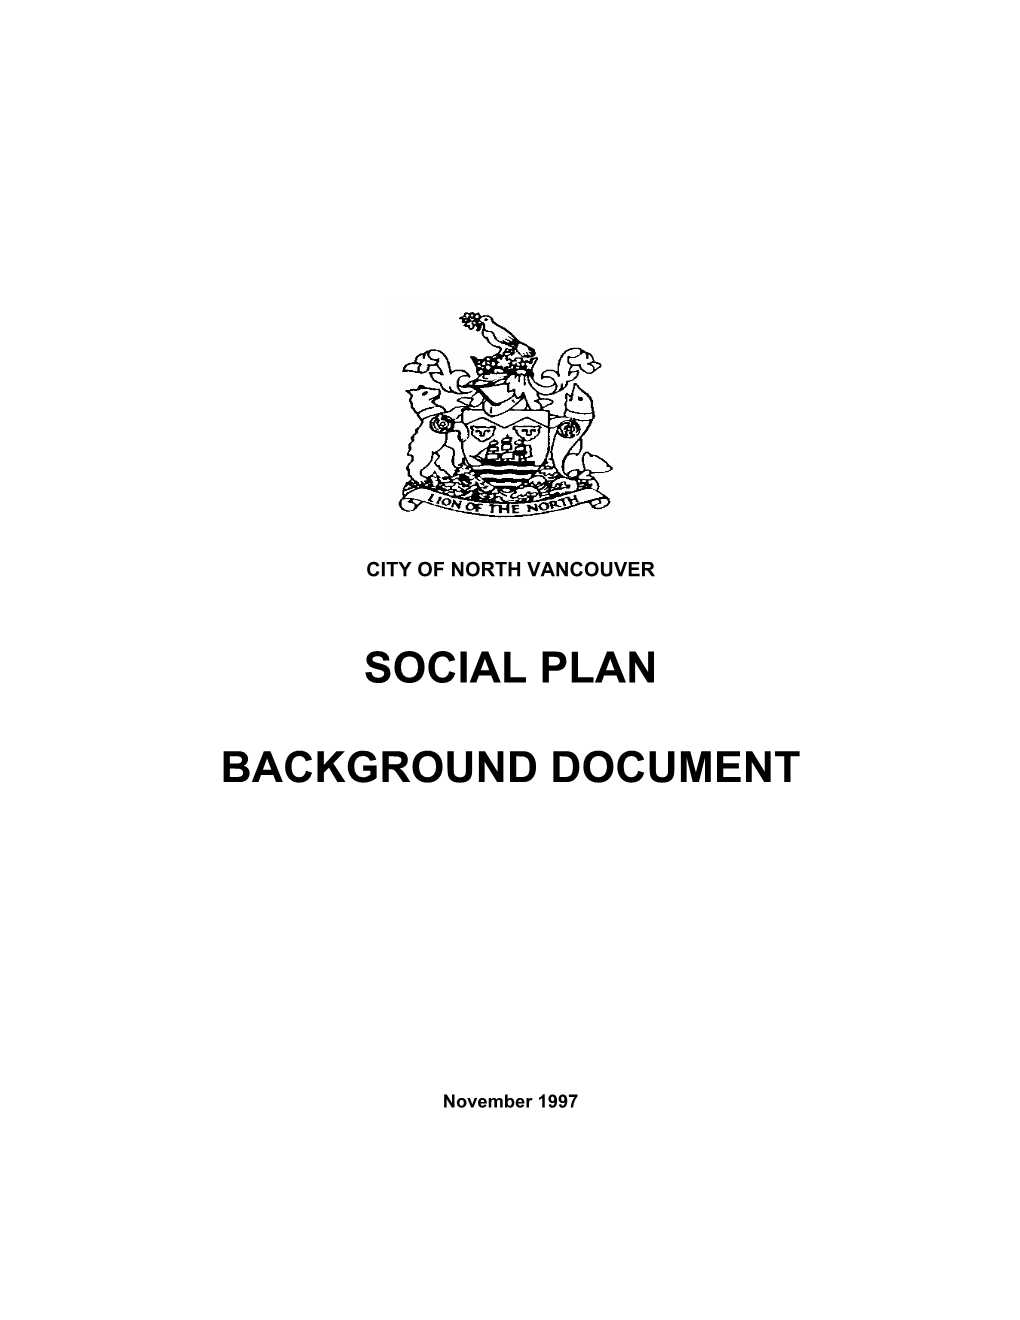 Social Plan Background Document